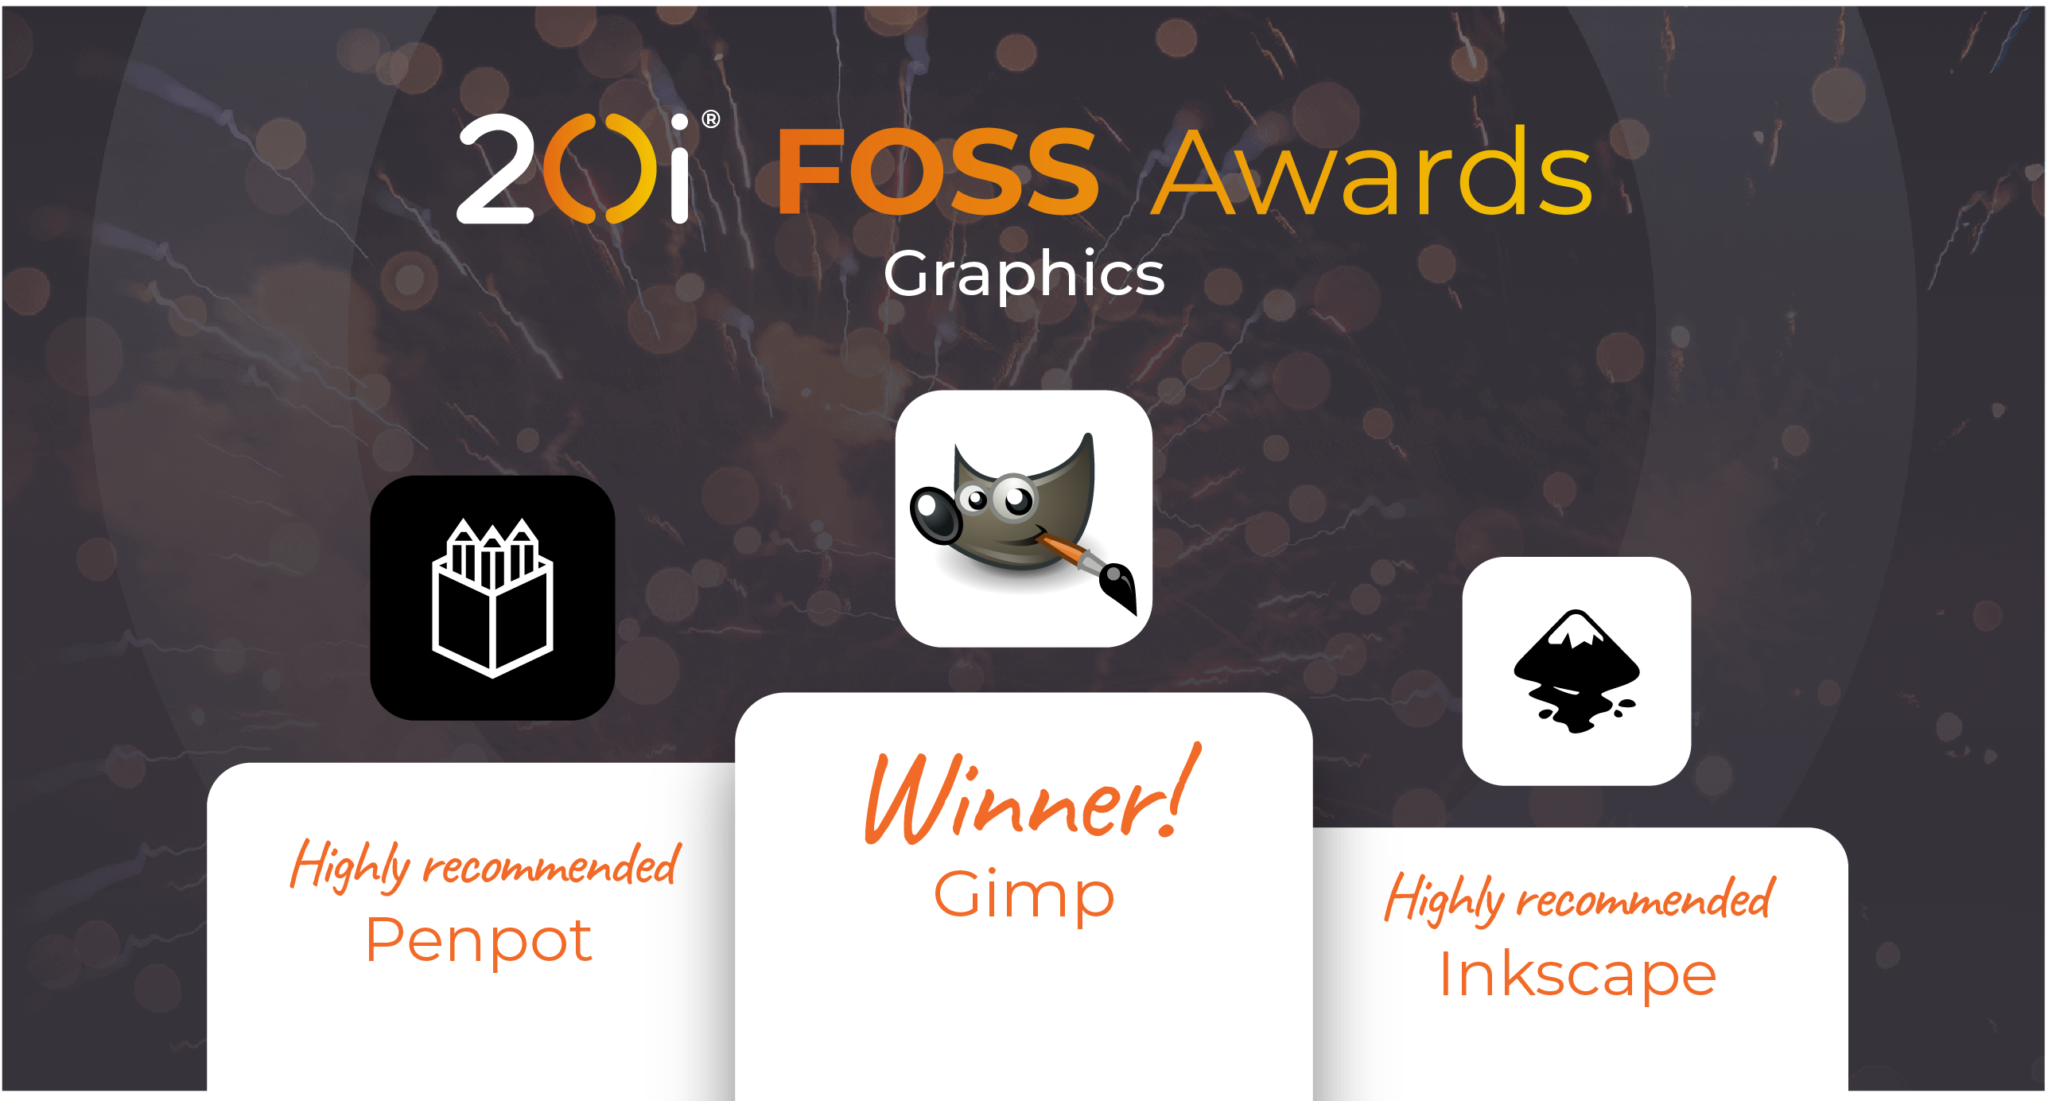 20i foss awards winners 2023 - graphics category